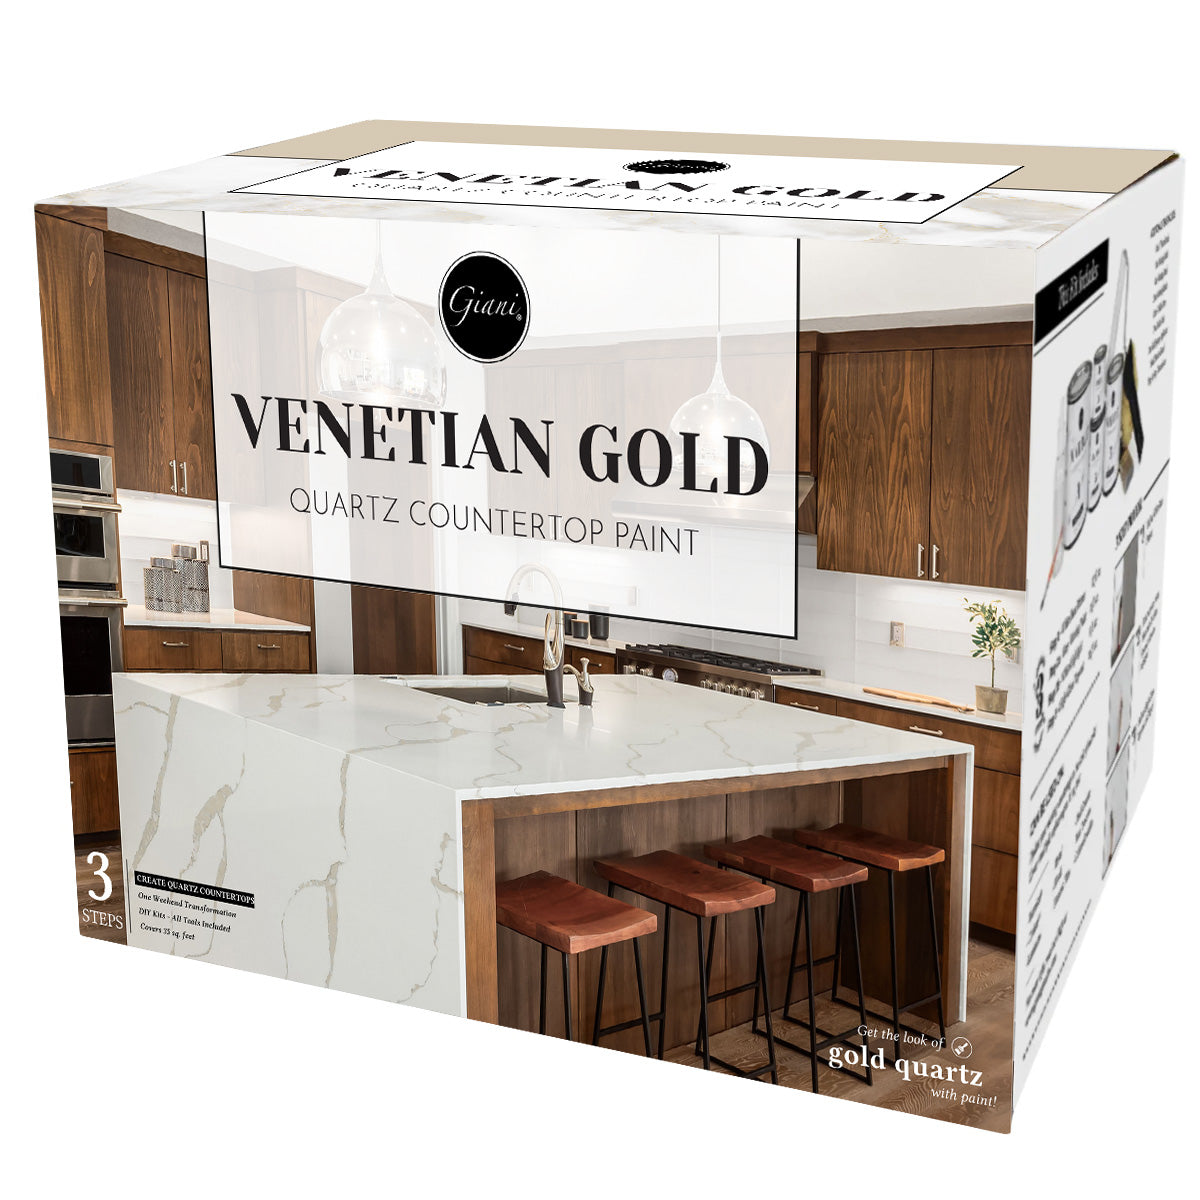 Giani Venetian Gold Quartz Countertop Paint Kit